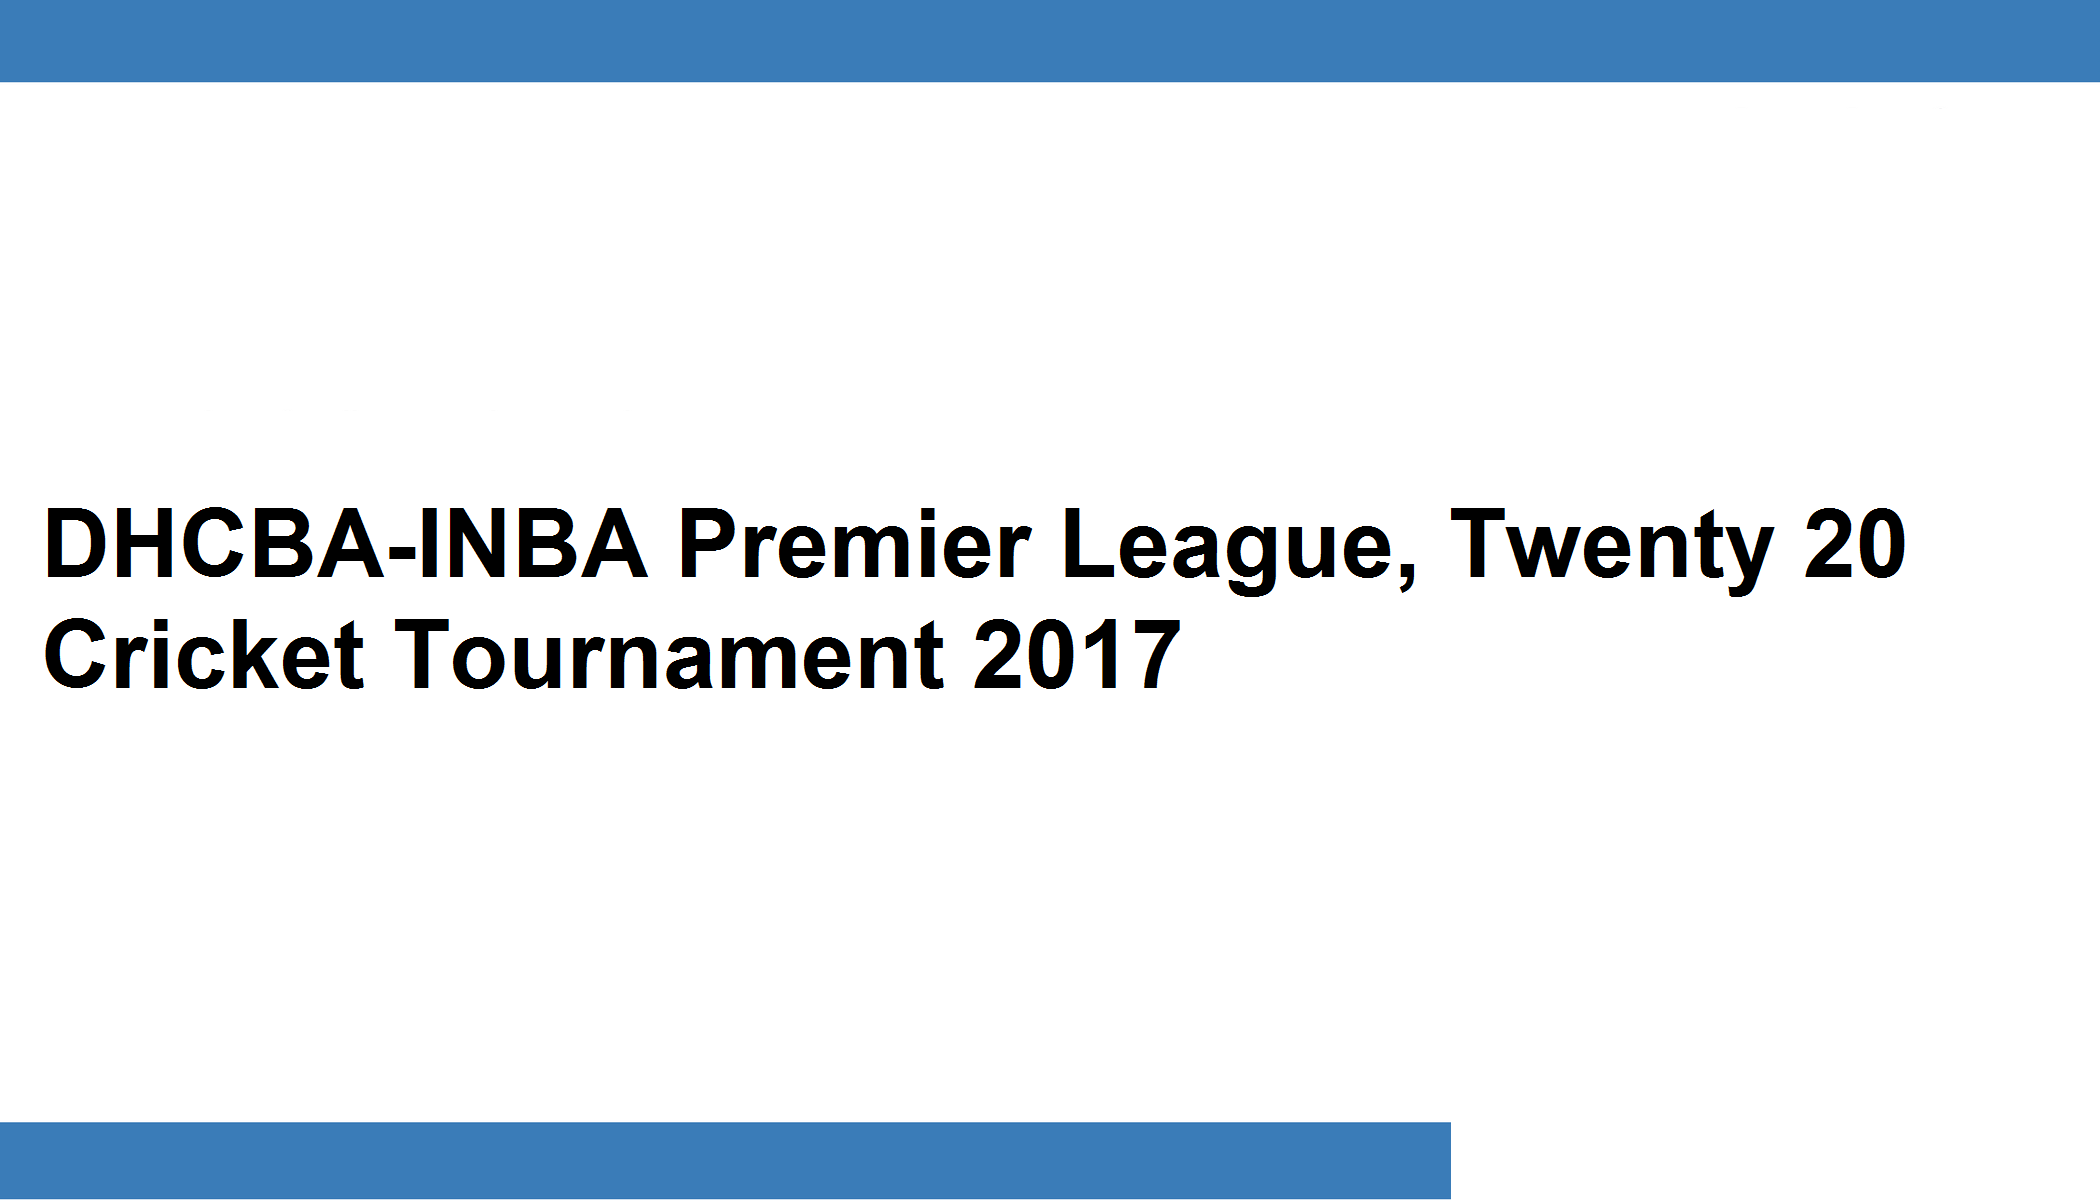 DHCBA-INBA Premier League, Twenty 20 Cricket Tournament 2017